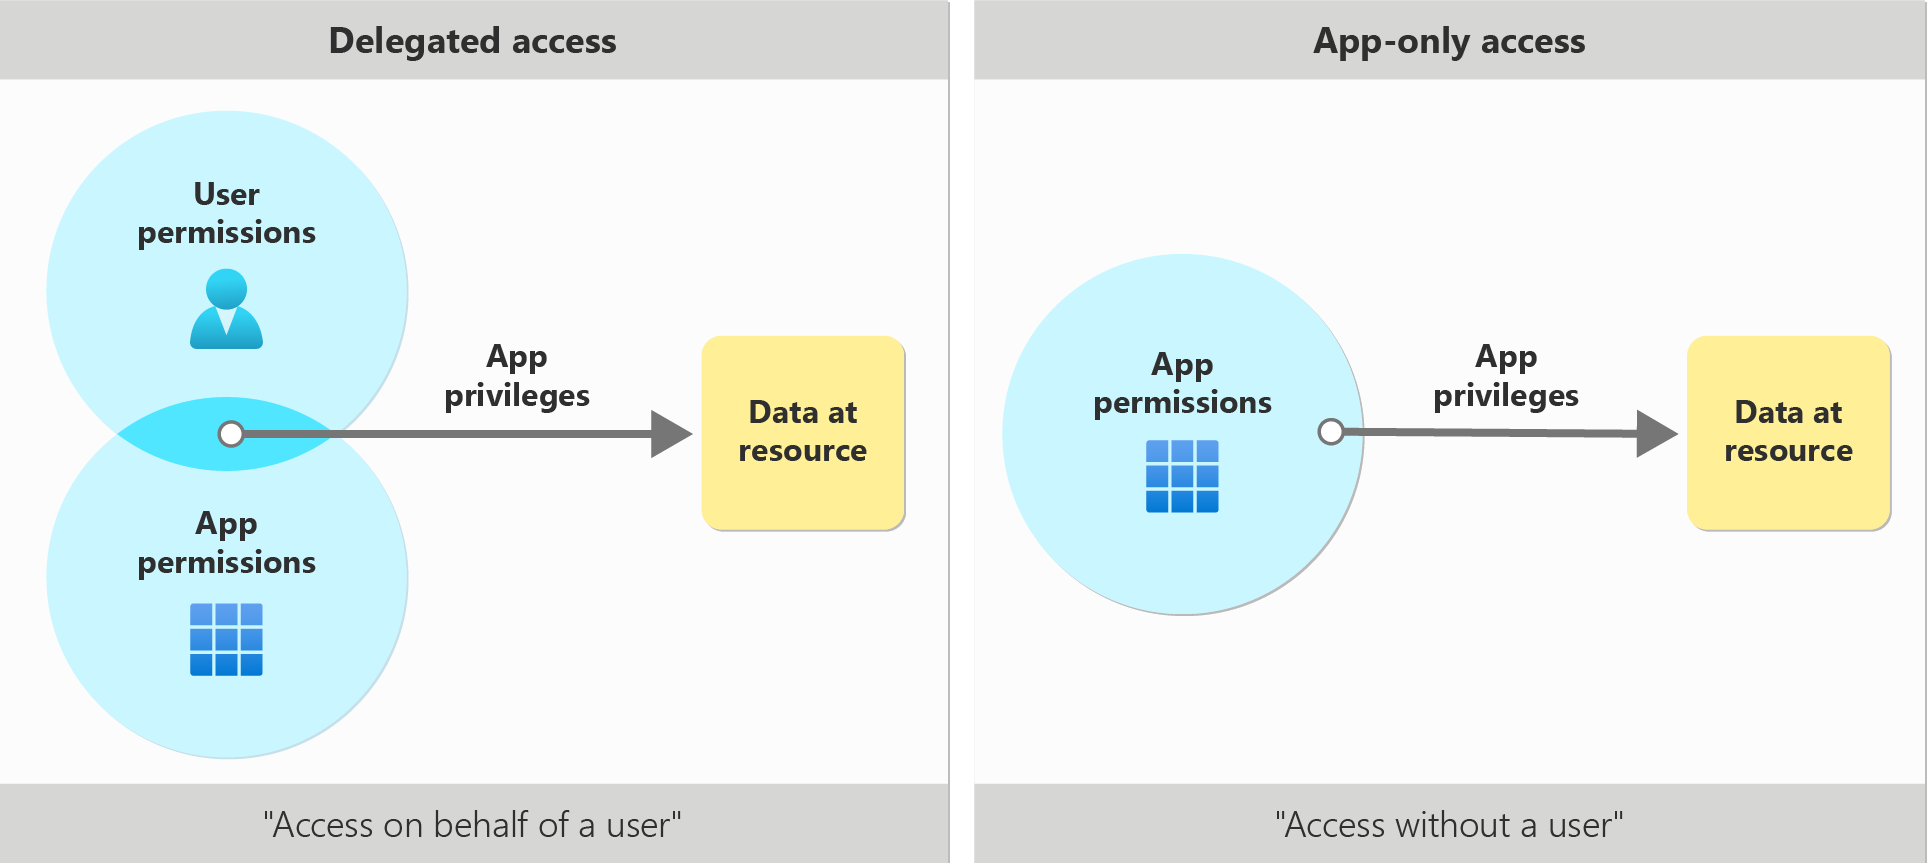 Image shows illustration of access scenarios.